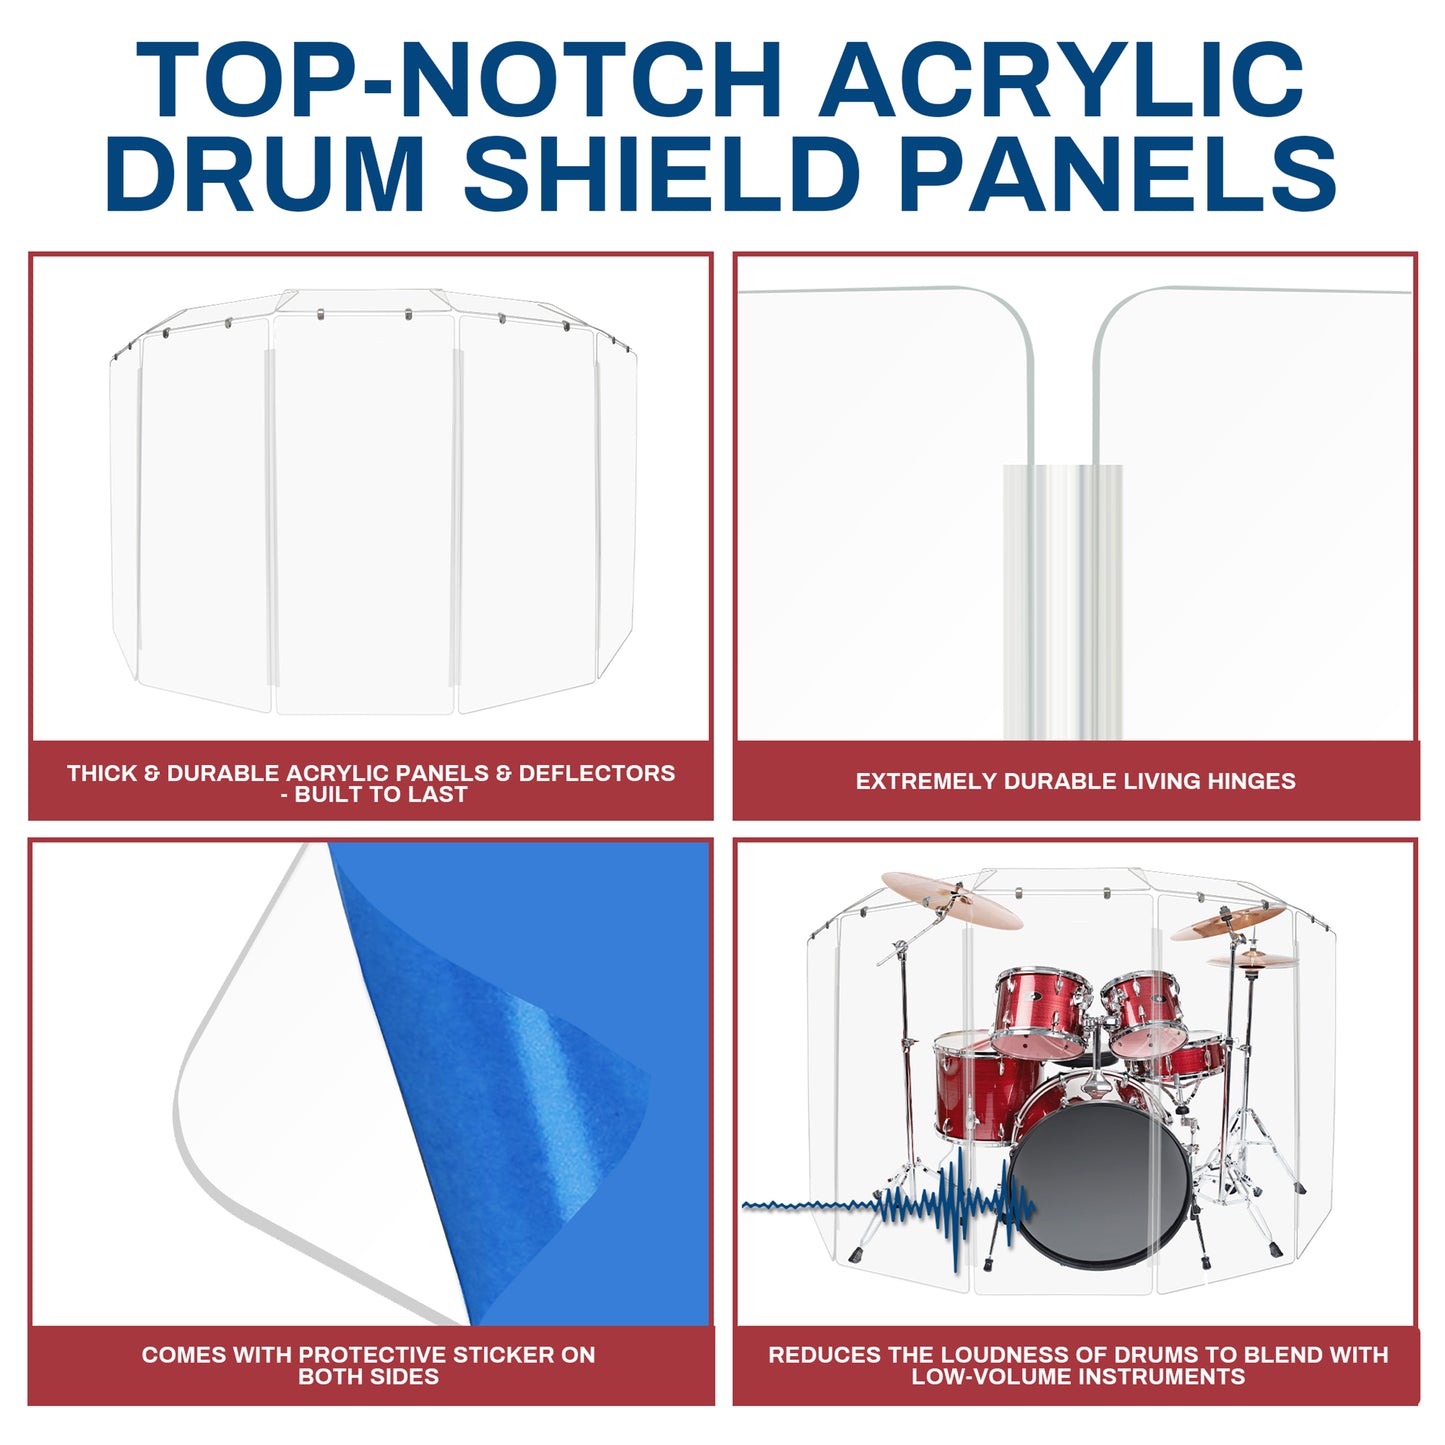 Drum Shield 2 ft. x 4 ft. Panel